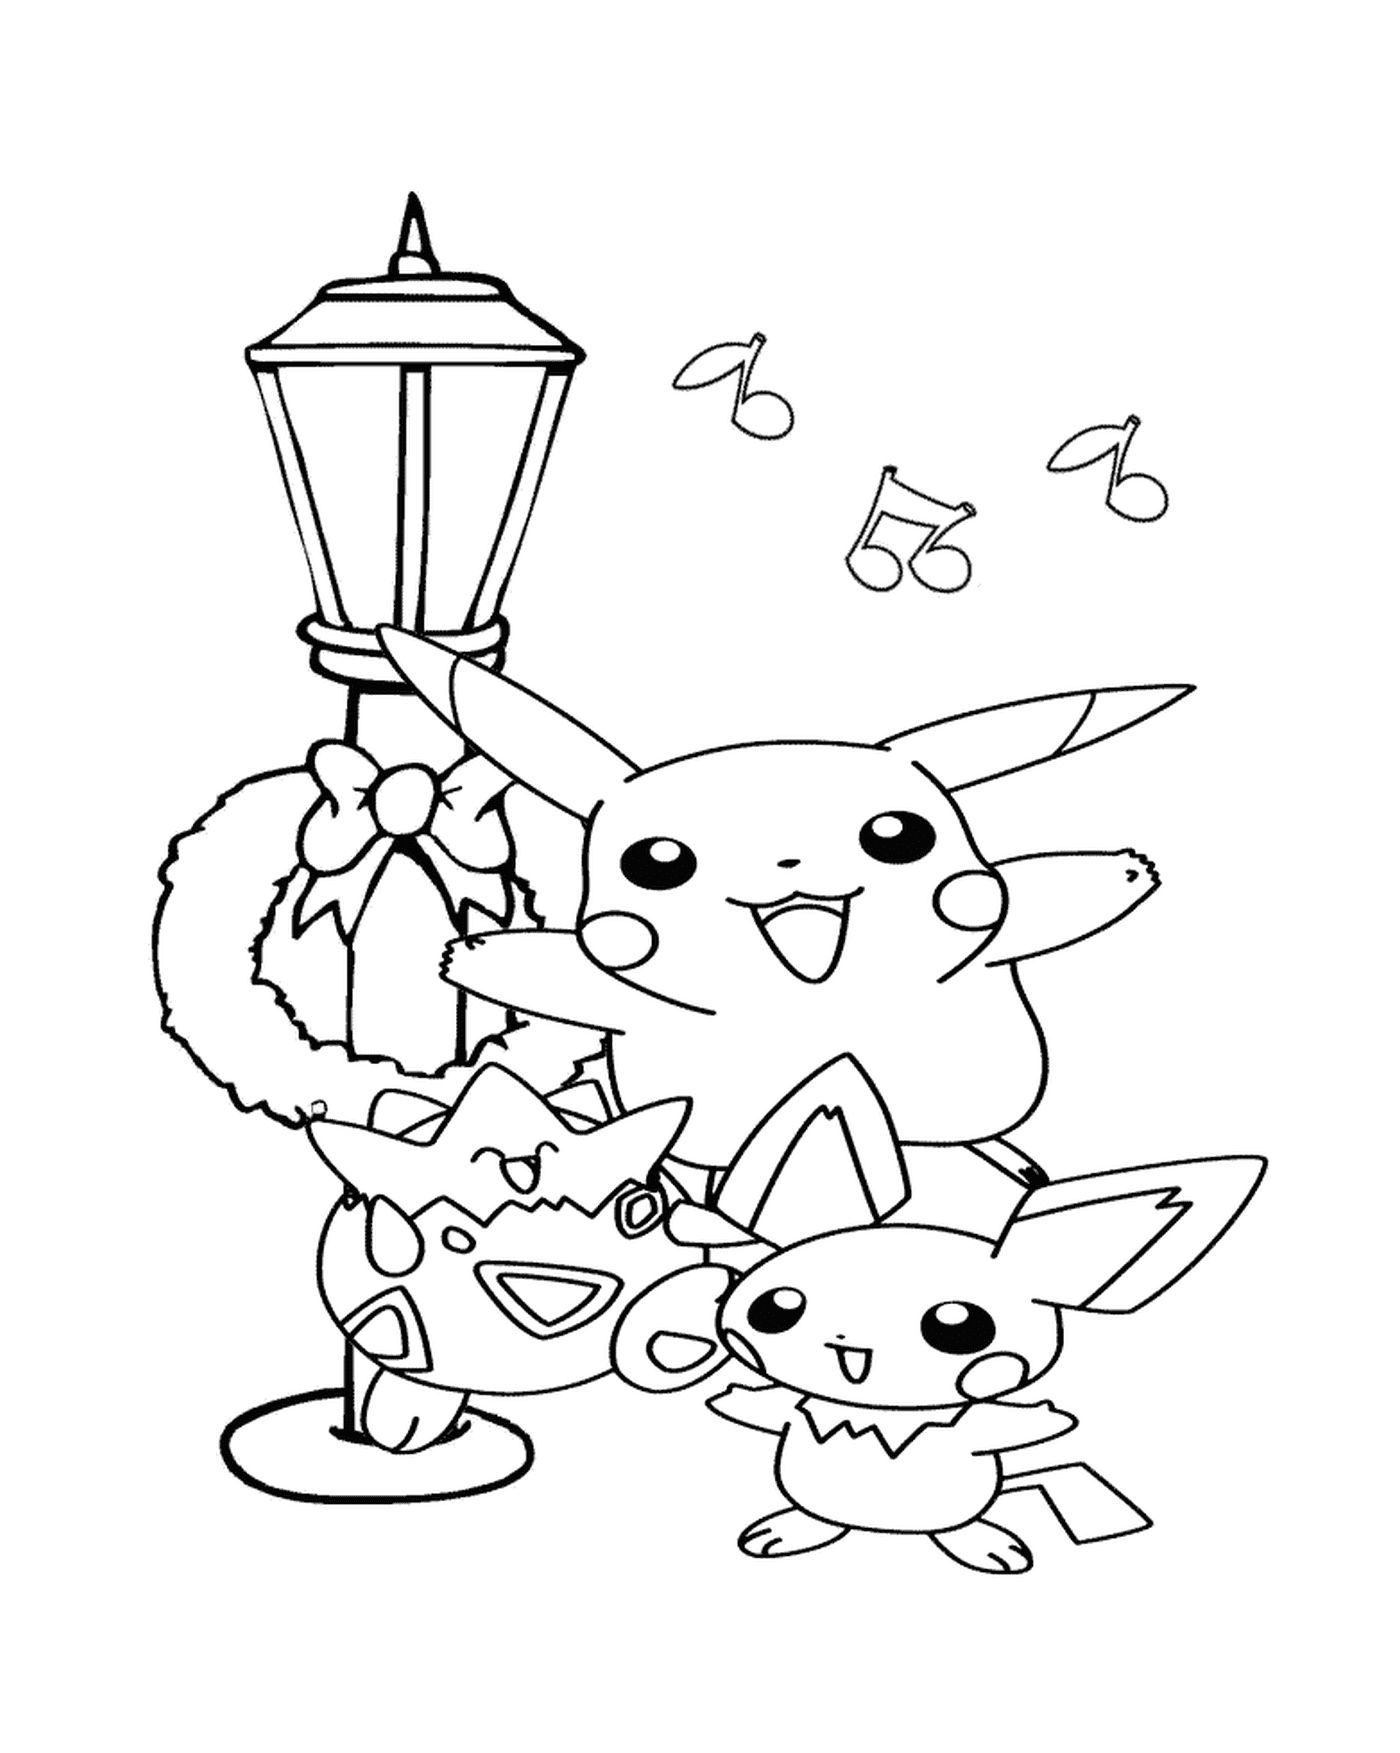  Pikachu e i suoi amici cantano 